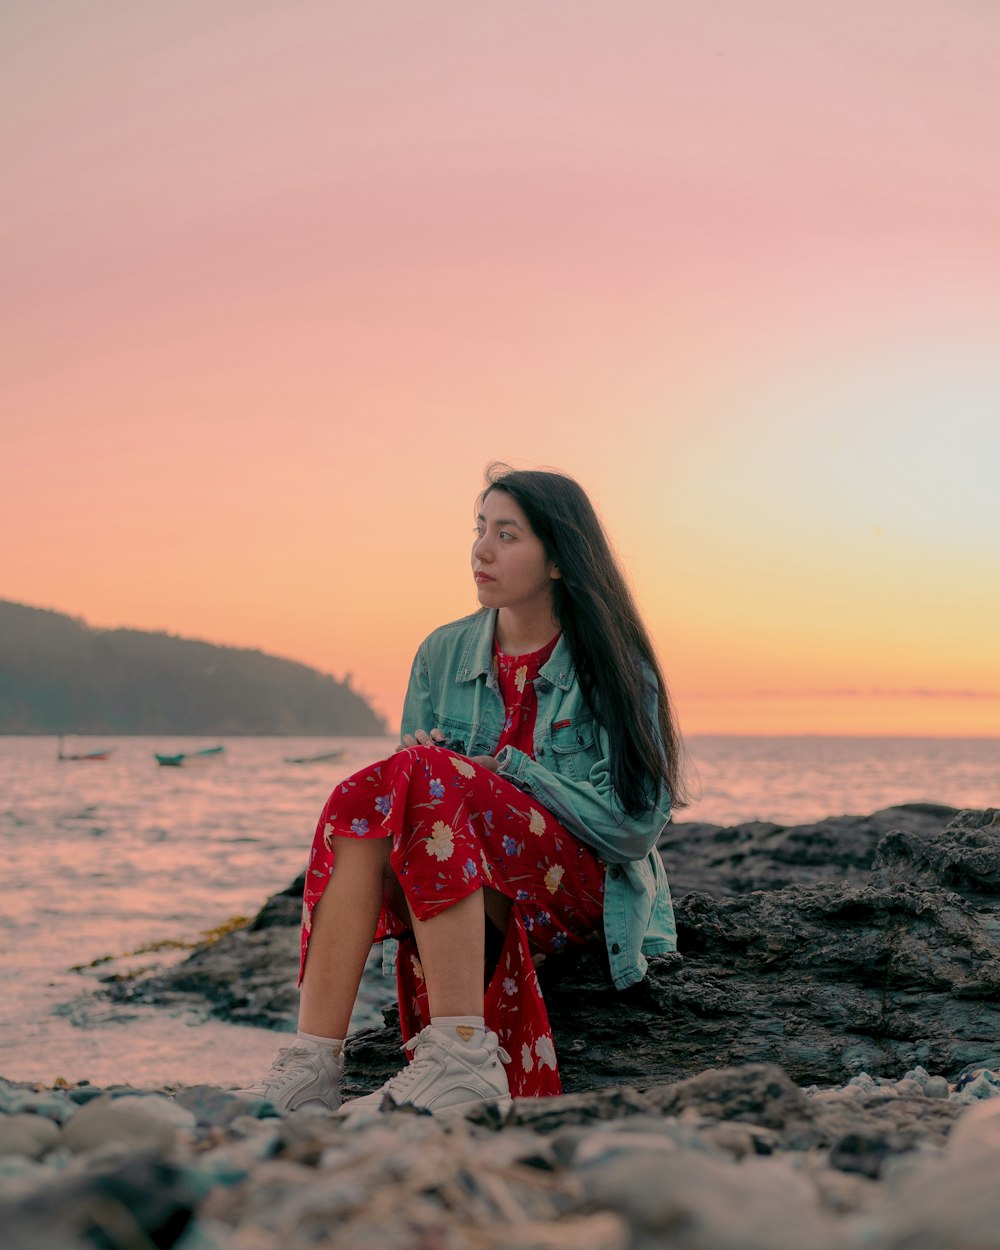 a woman sitting on a rock near the ocean